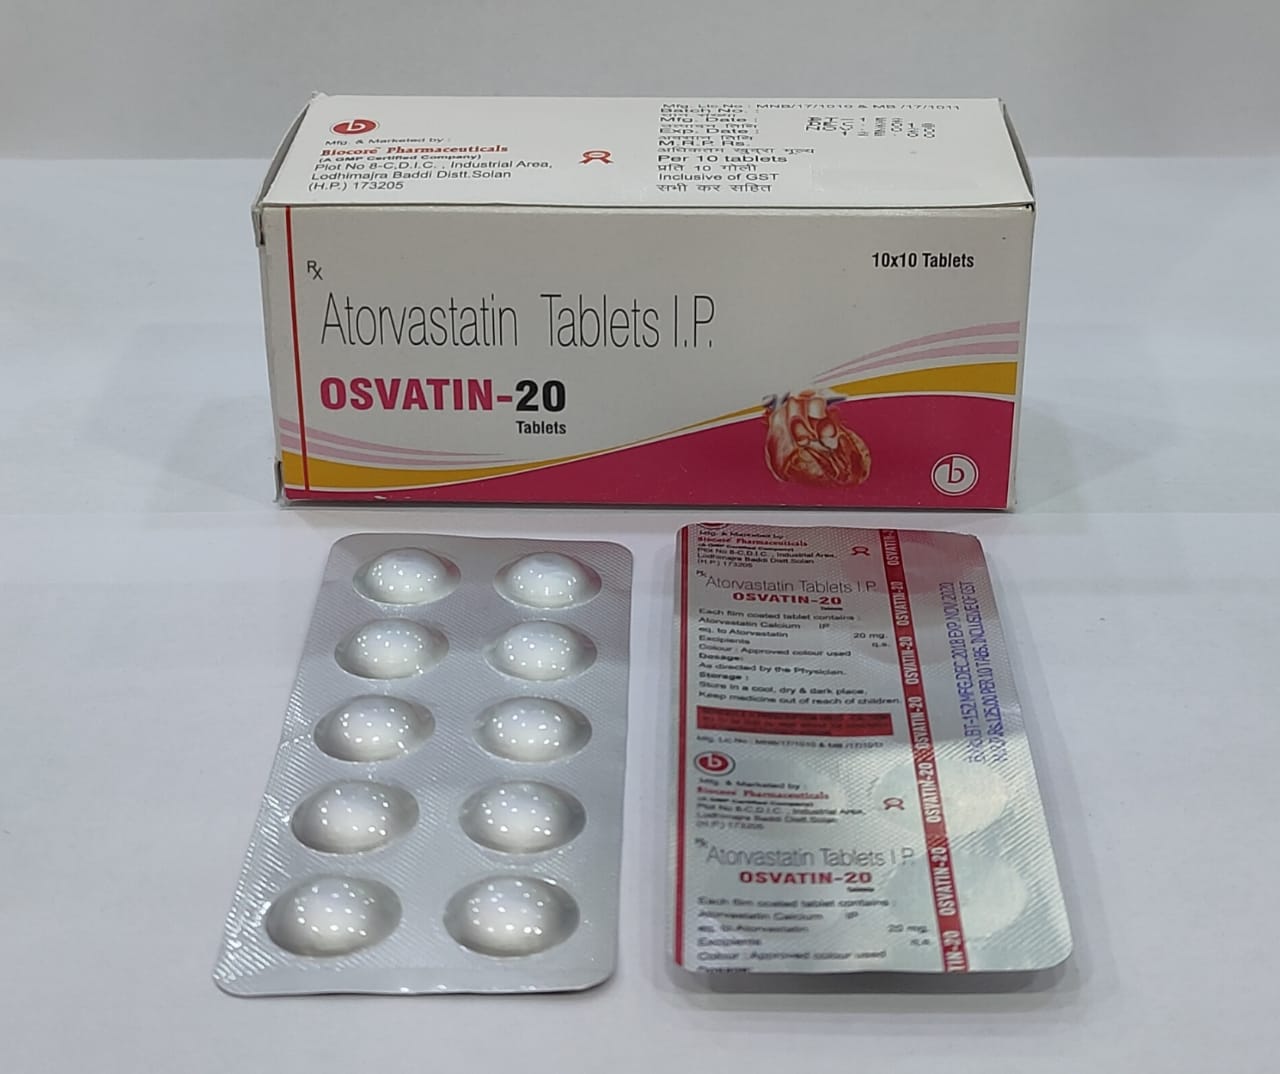 OSVATIN-20 Tablets